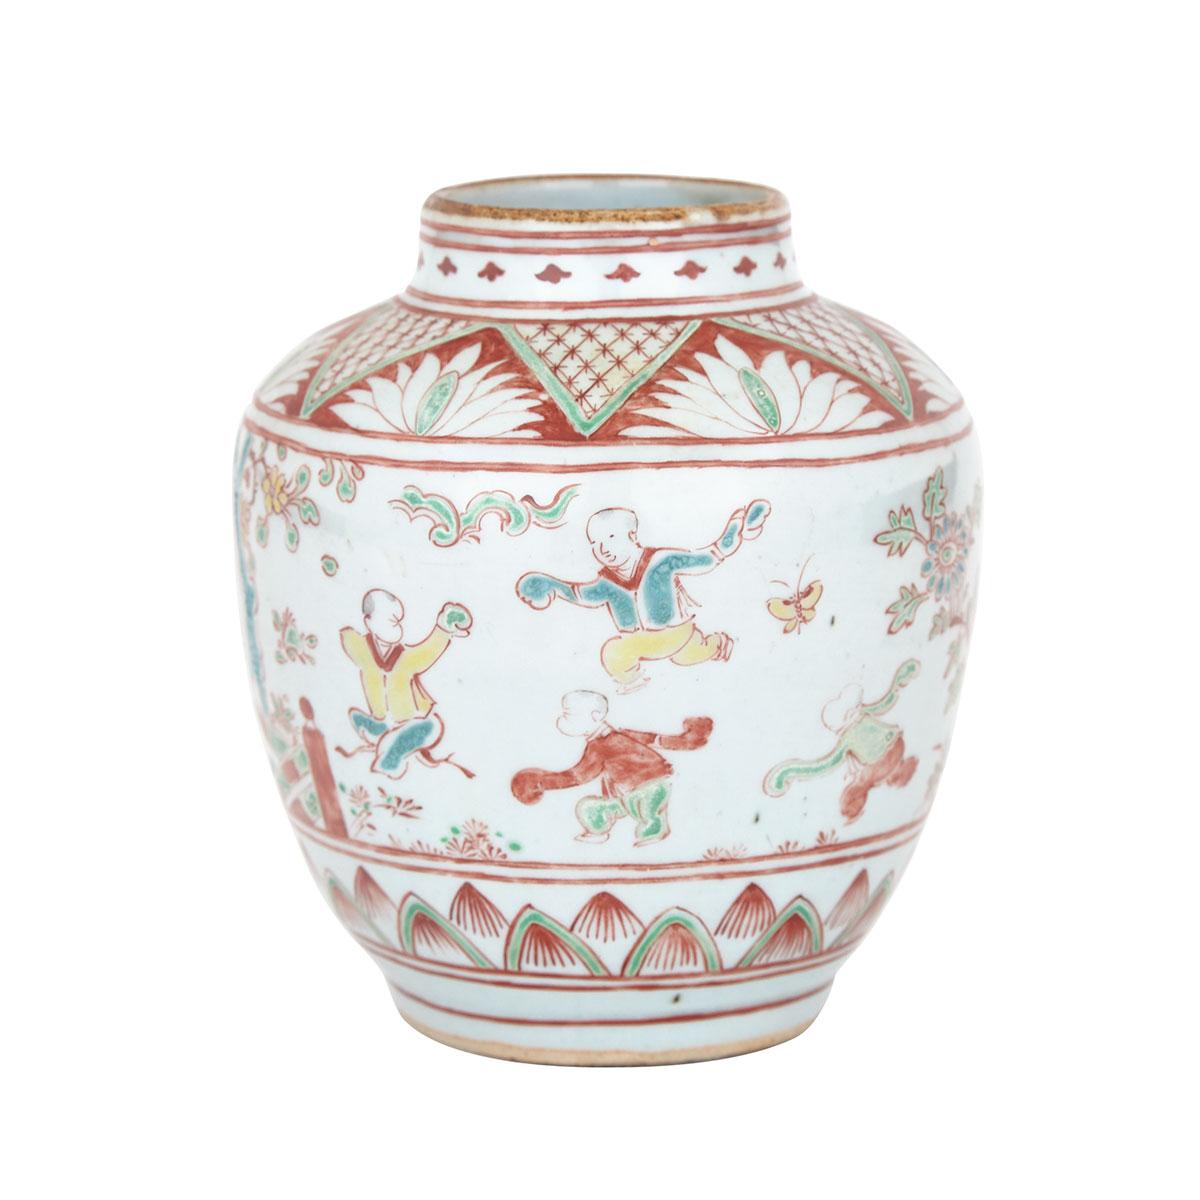 Wucai ‘Boys’ Guan Jar, 17th Century